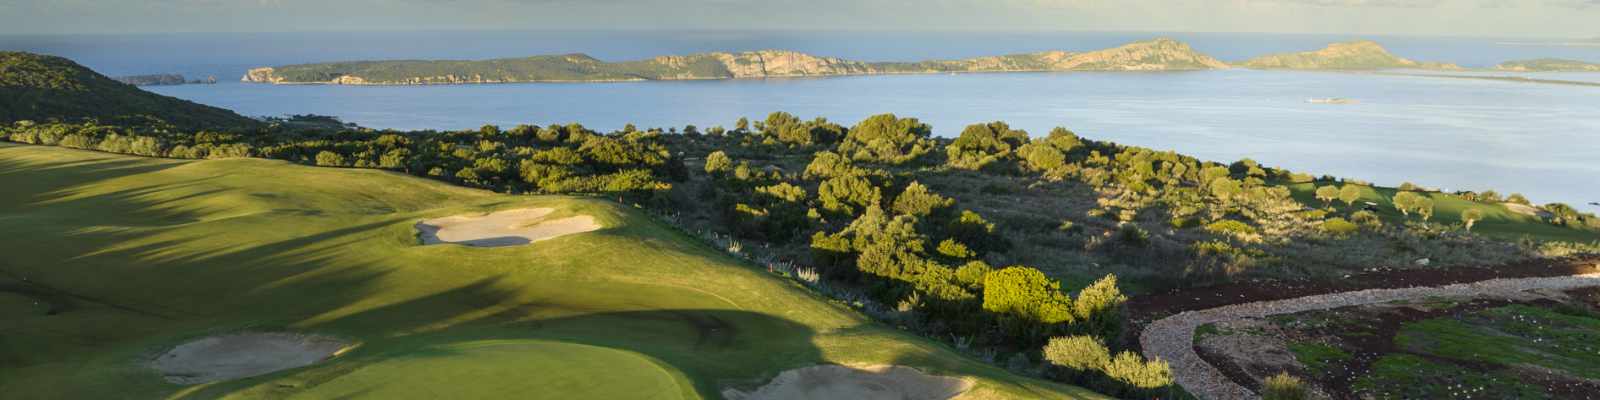 Der International Olympic Academy Golf Course in Costa Navarino (photo by Azaela)